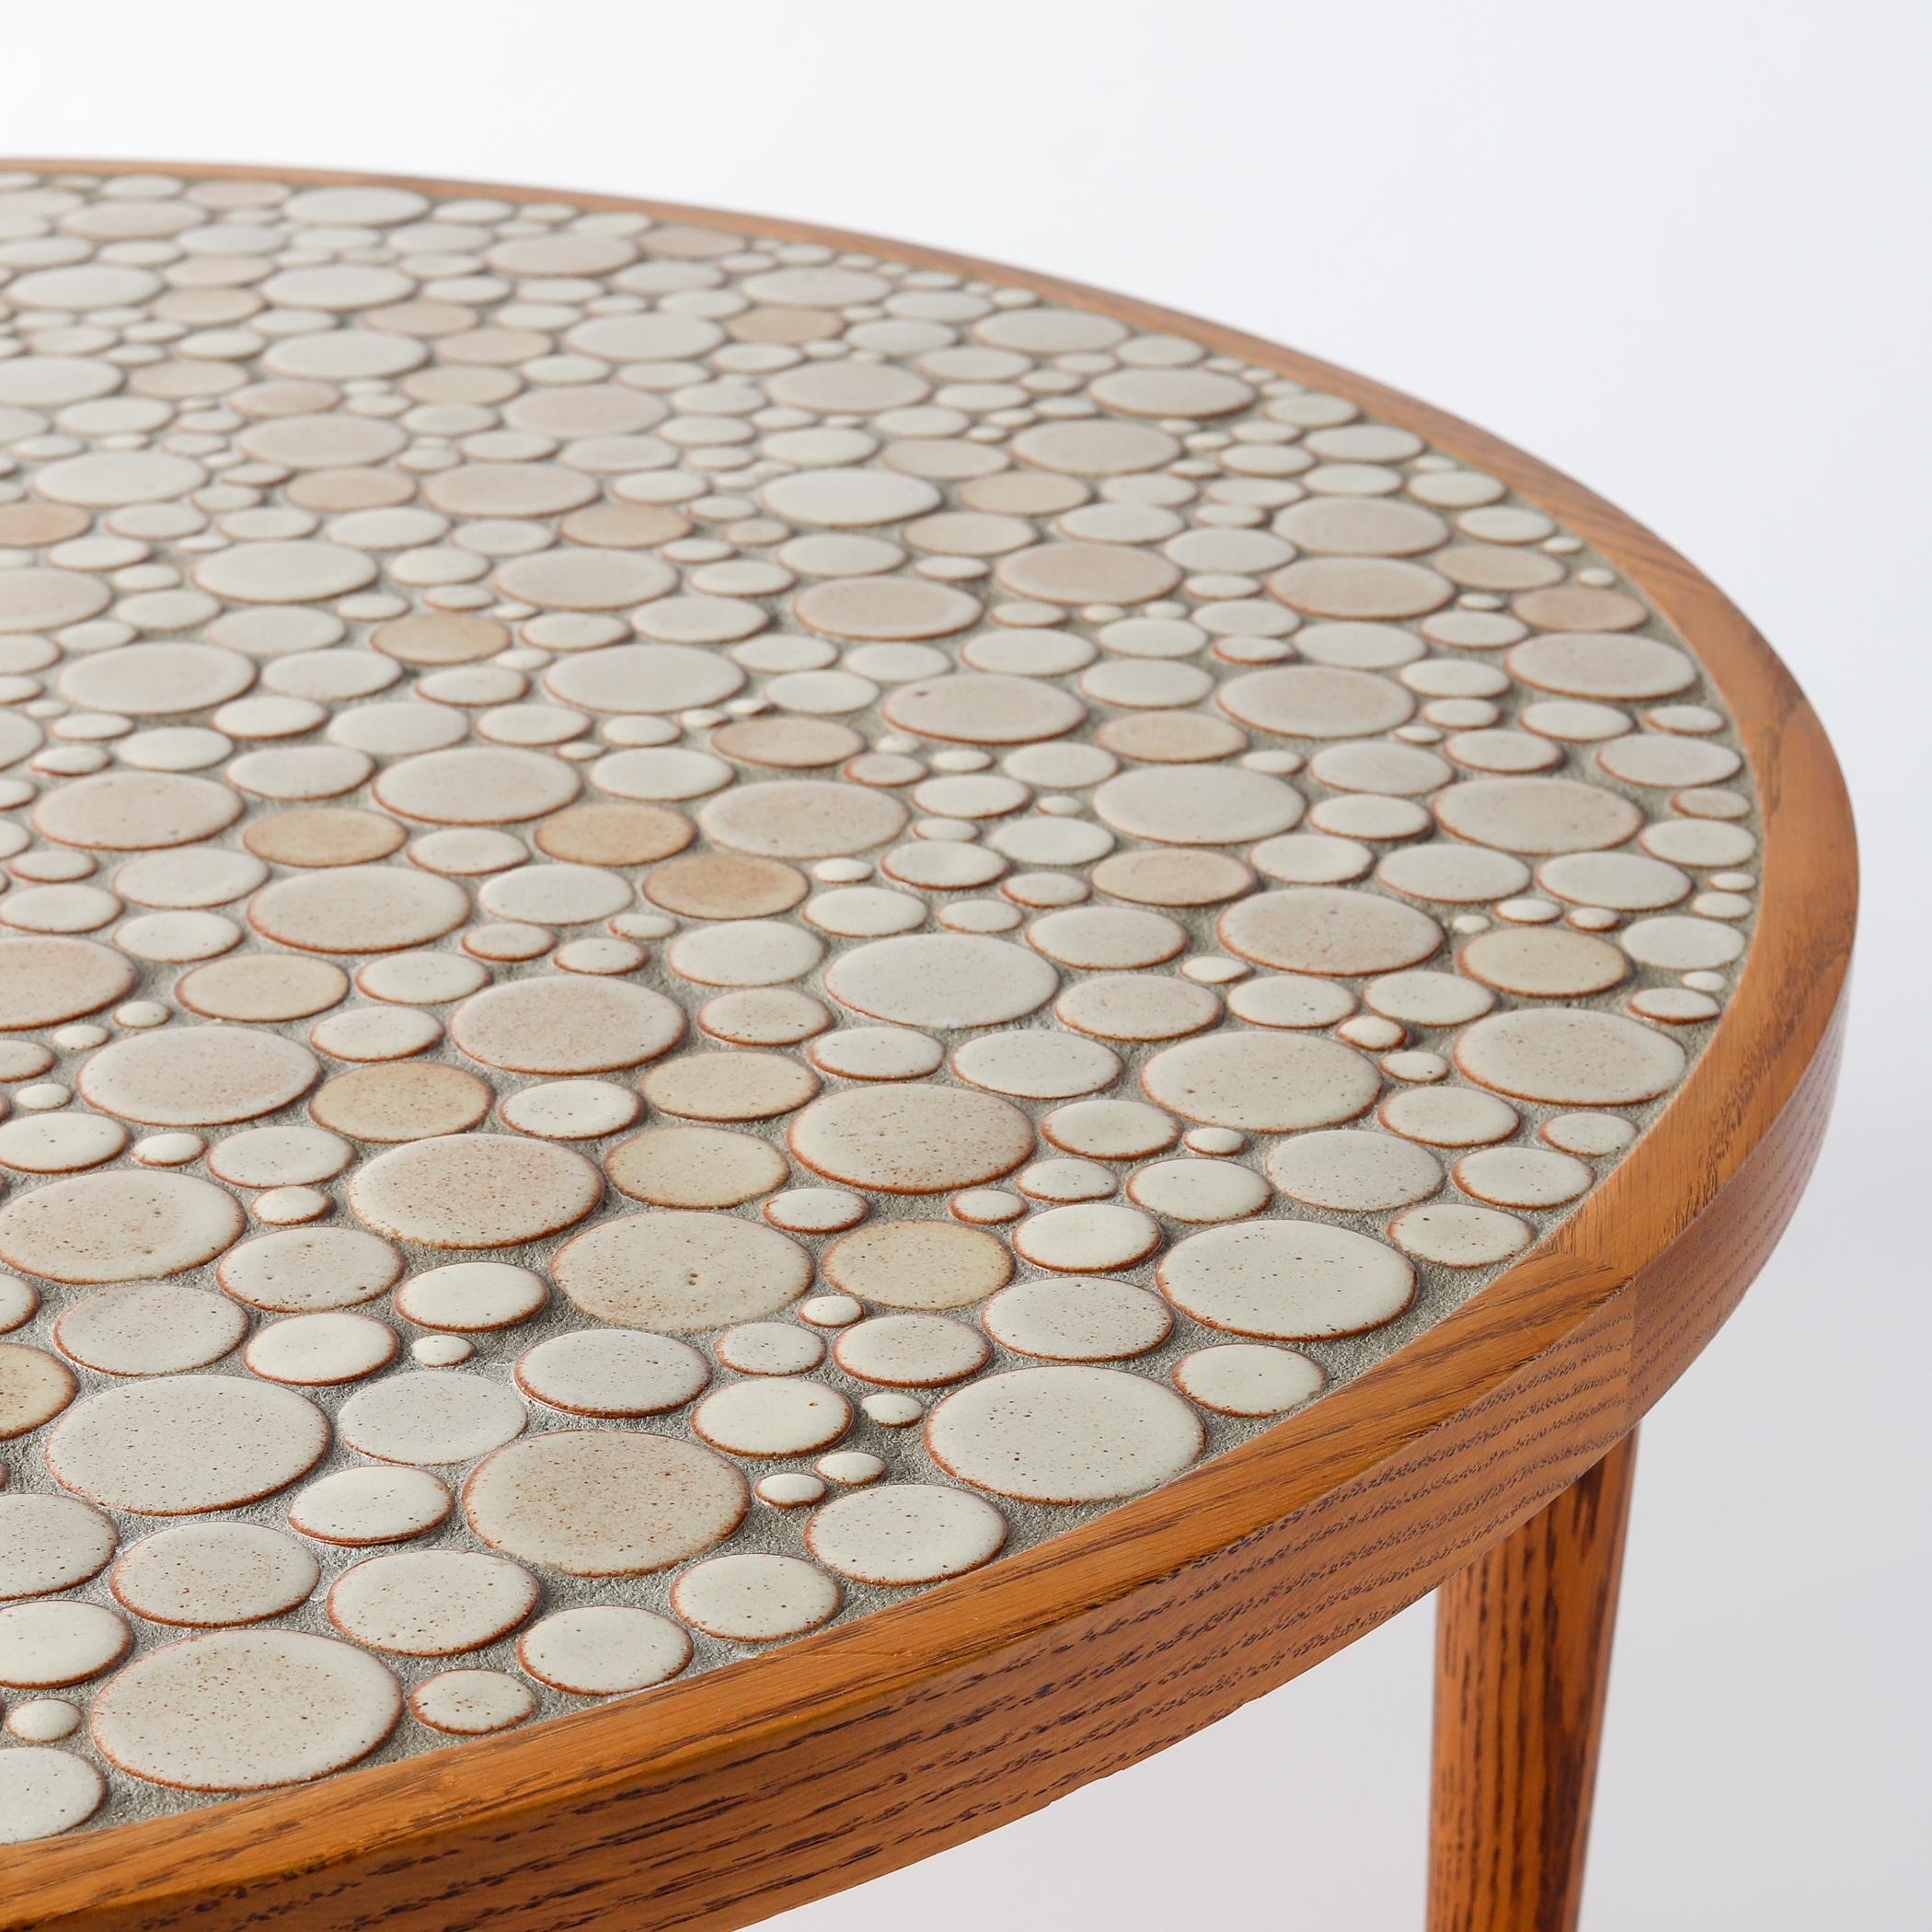 American Martz Ceramic Tile Top Oak Coffee Table, Tan Circles, Marshall Studios For Sale